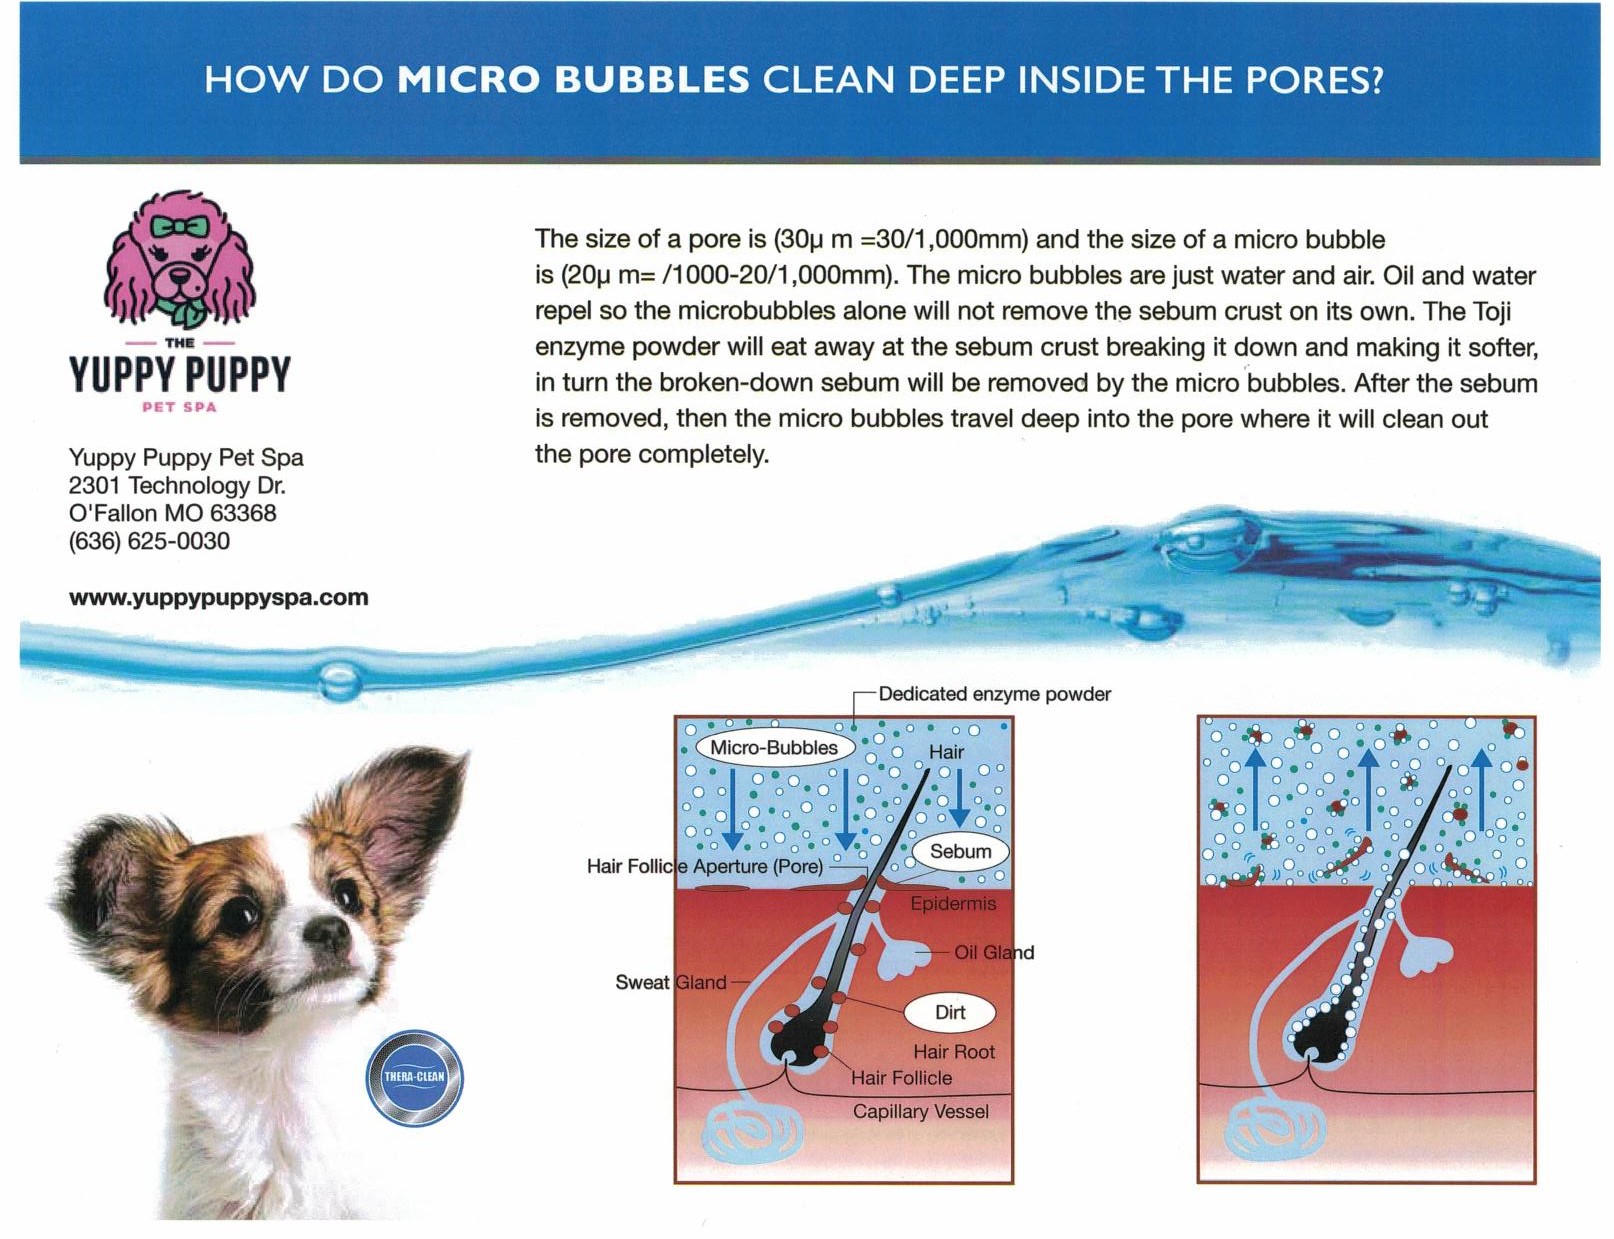 How do Micro Bubbles Clean Deep inside the Pores?